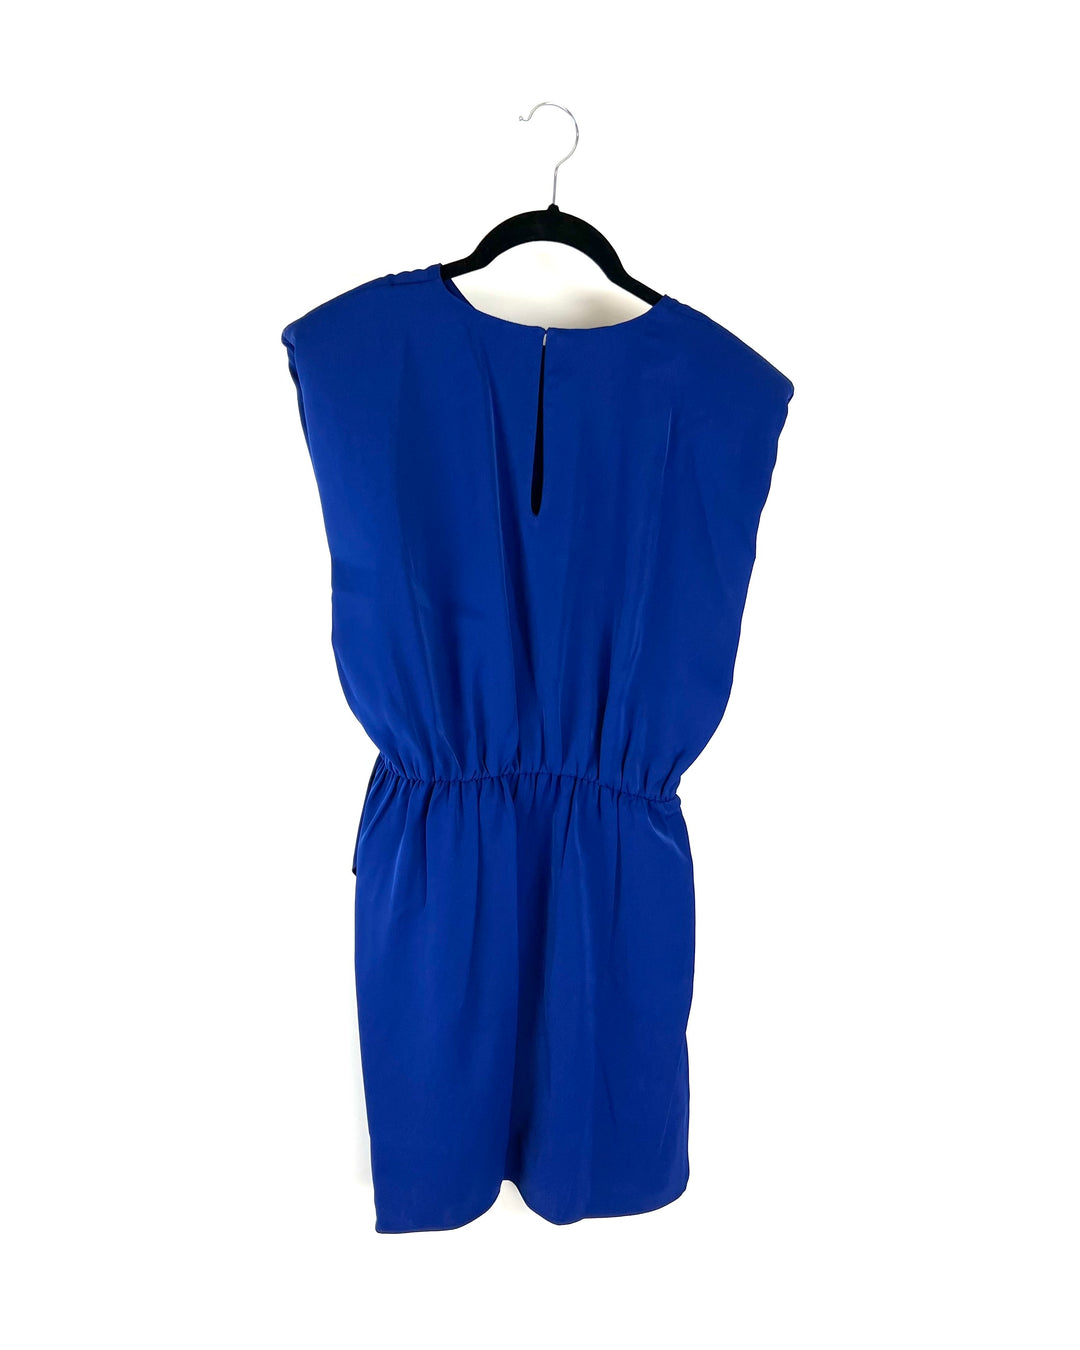 Cobalt Blue Dress - Extra Small, Small and Medium